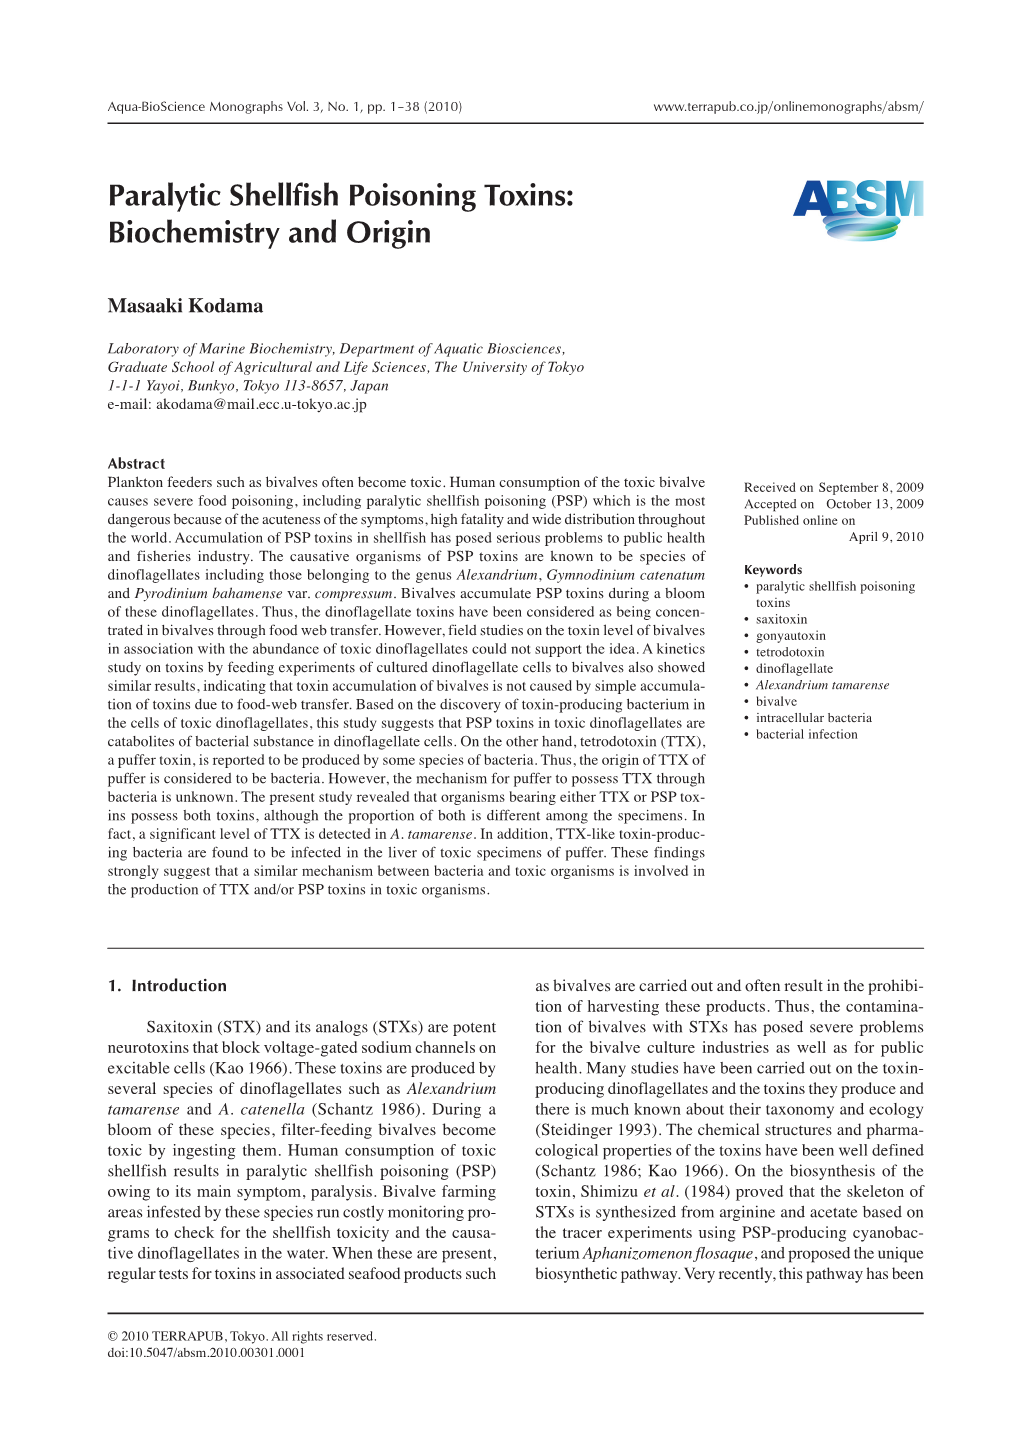 Paralytic Shellfish Poisoning Toxins: Biochemistry and Origin